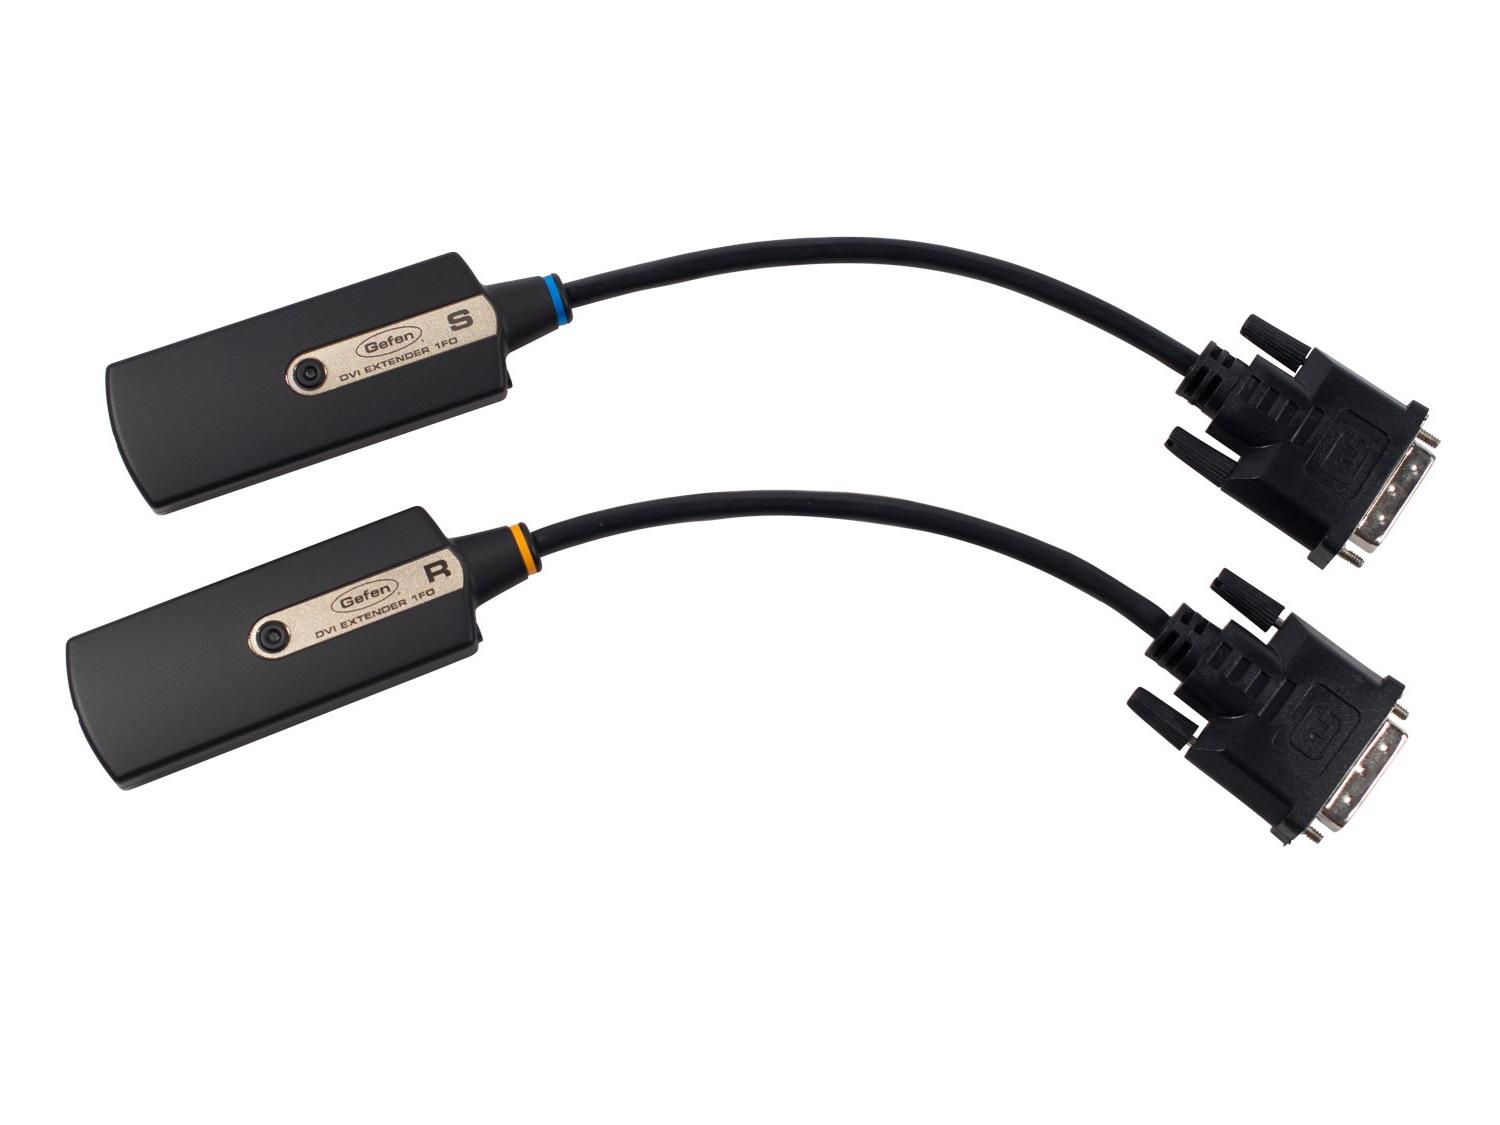 EXT-DVI-CP-FM10 DVI Fiber Optic Extender( Sender/Receiver) Kit (Pigtail Modules) by Gefen